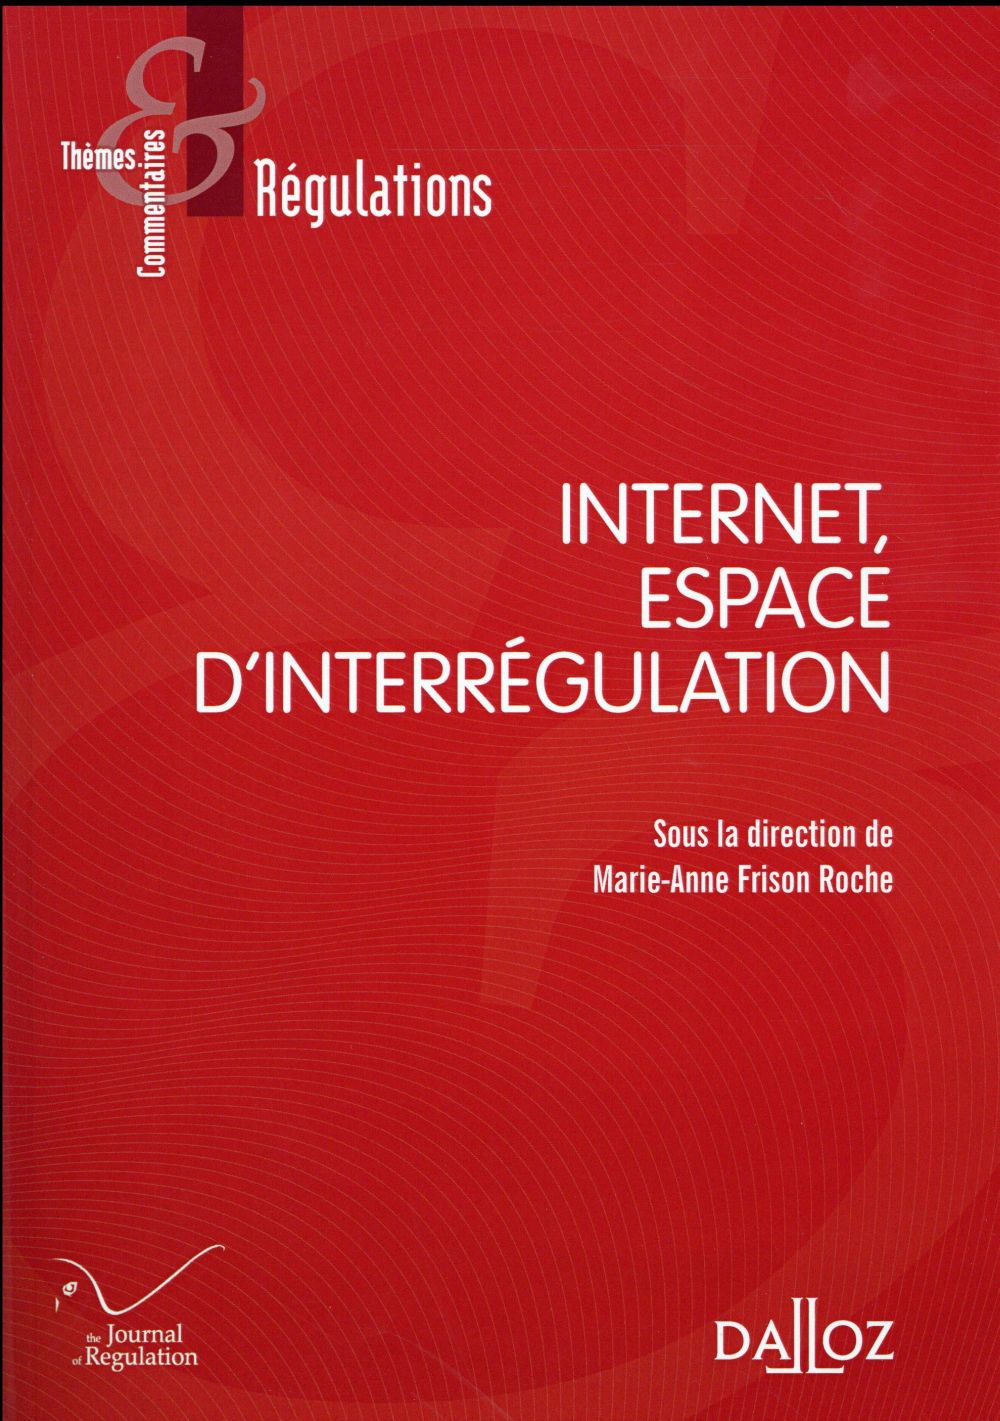 INTERNET, ESPACE D'INTERREGULATION